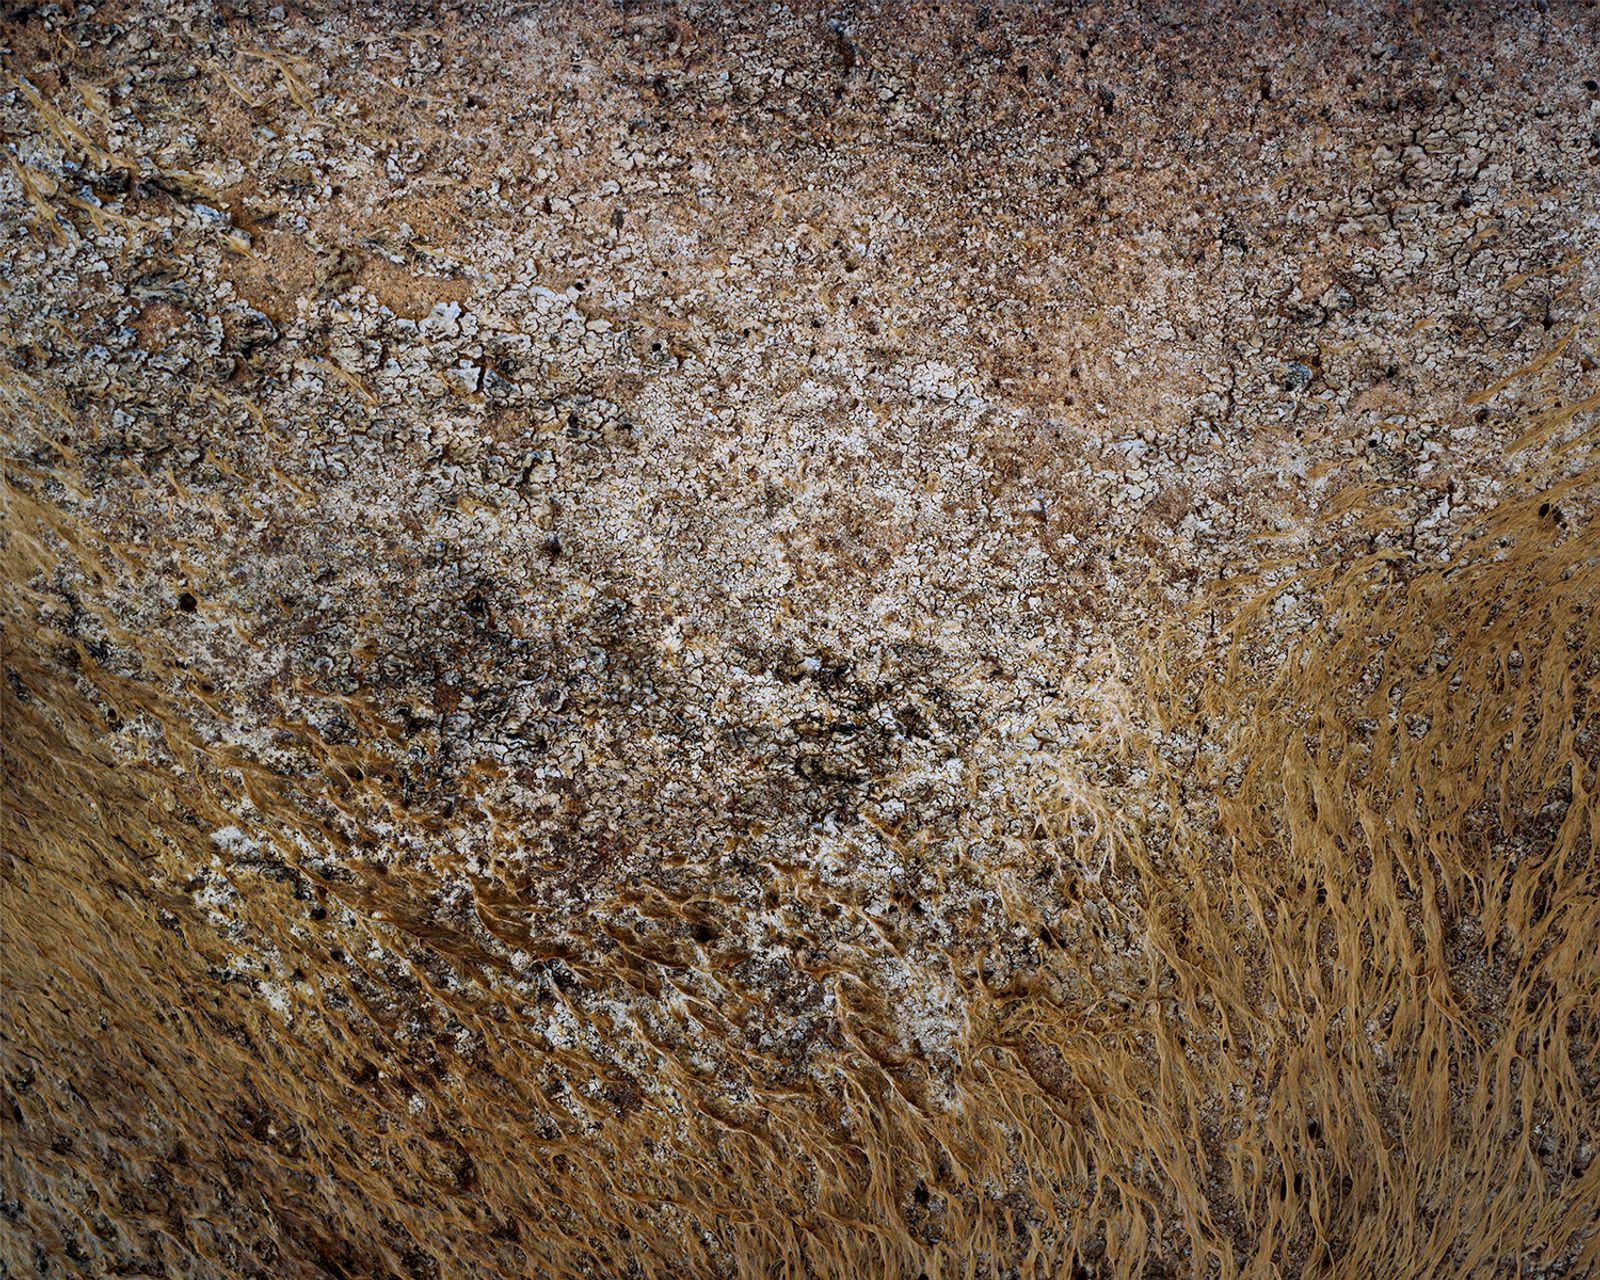 © BRAD TEMKIN - "Dried Algae on Wall of Fairmont Reservoir - Antelope Valley, CA 2021"